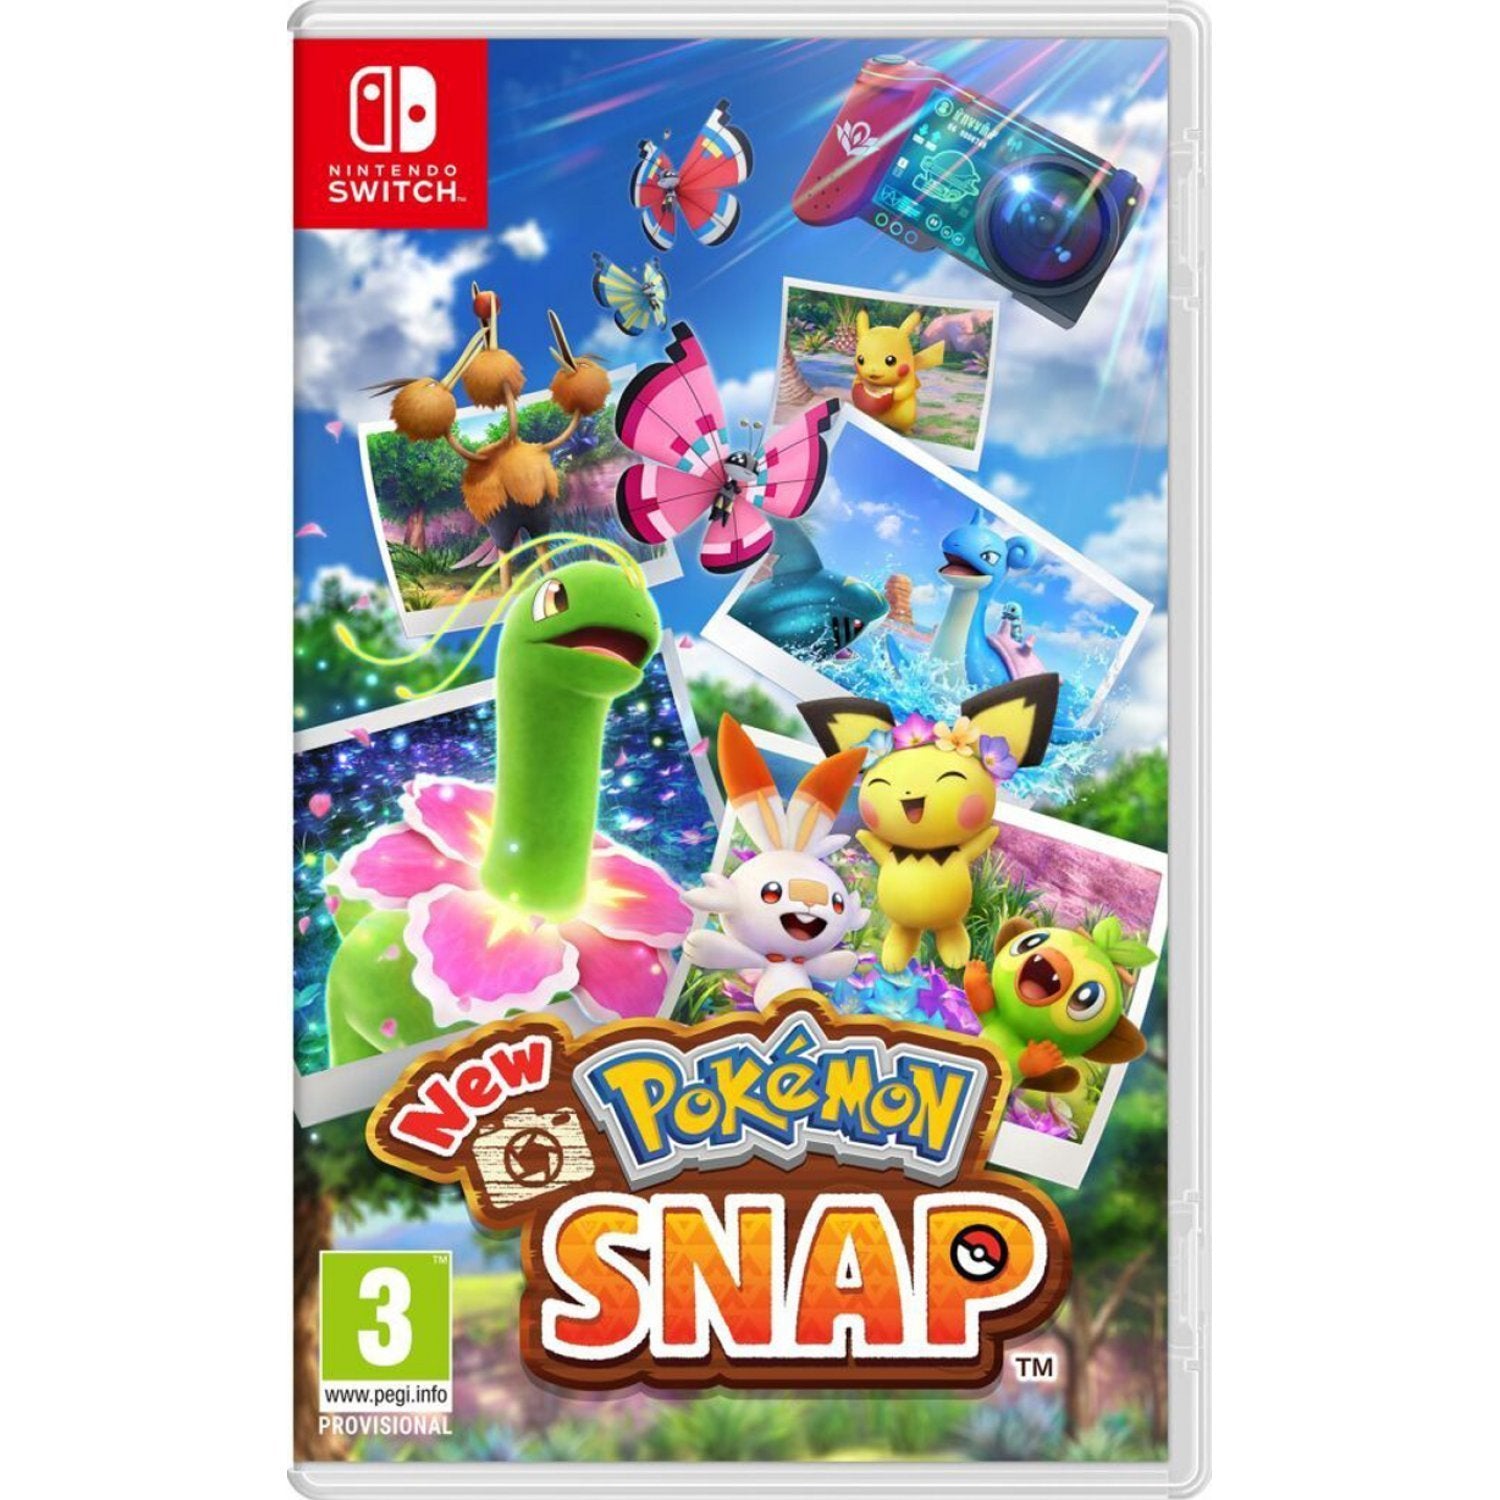 Neuer Pokemon Snap (UK, SE, DK, FI)